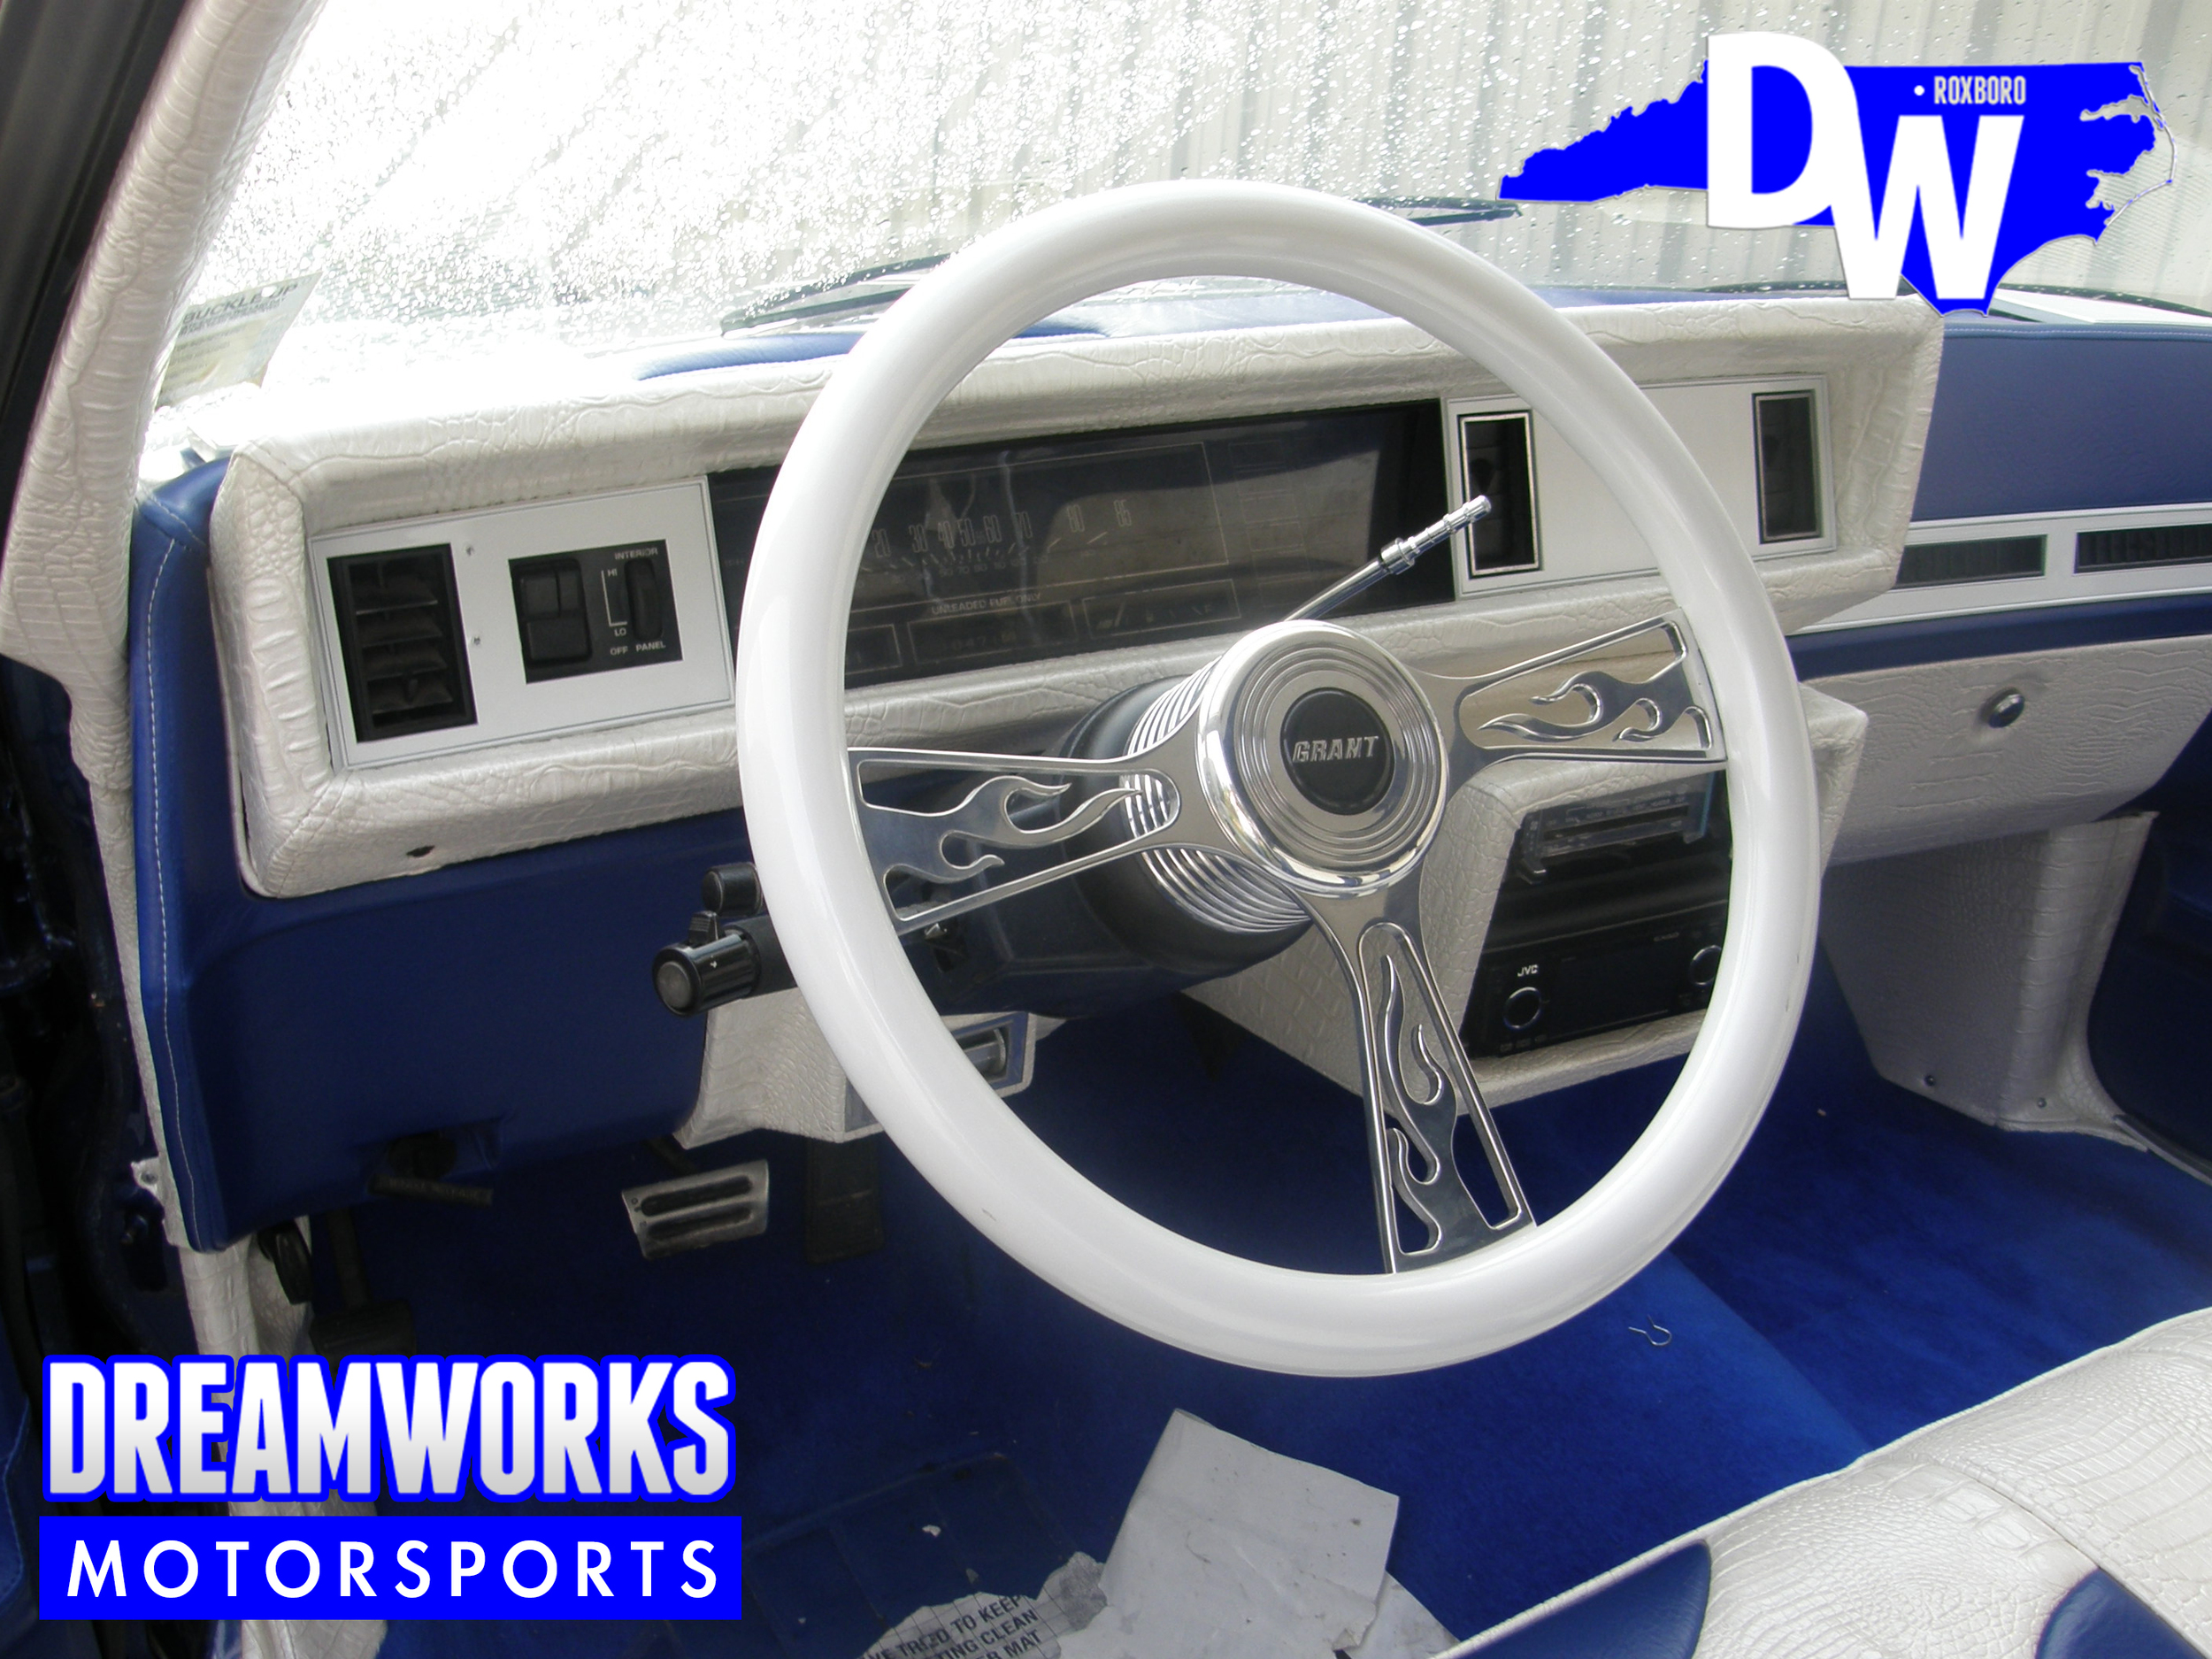 86-Oldsmobile-Cutlass-Dreamworks-Motorsports-4.jpg